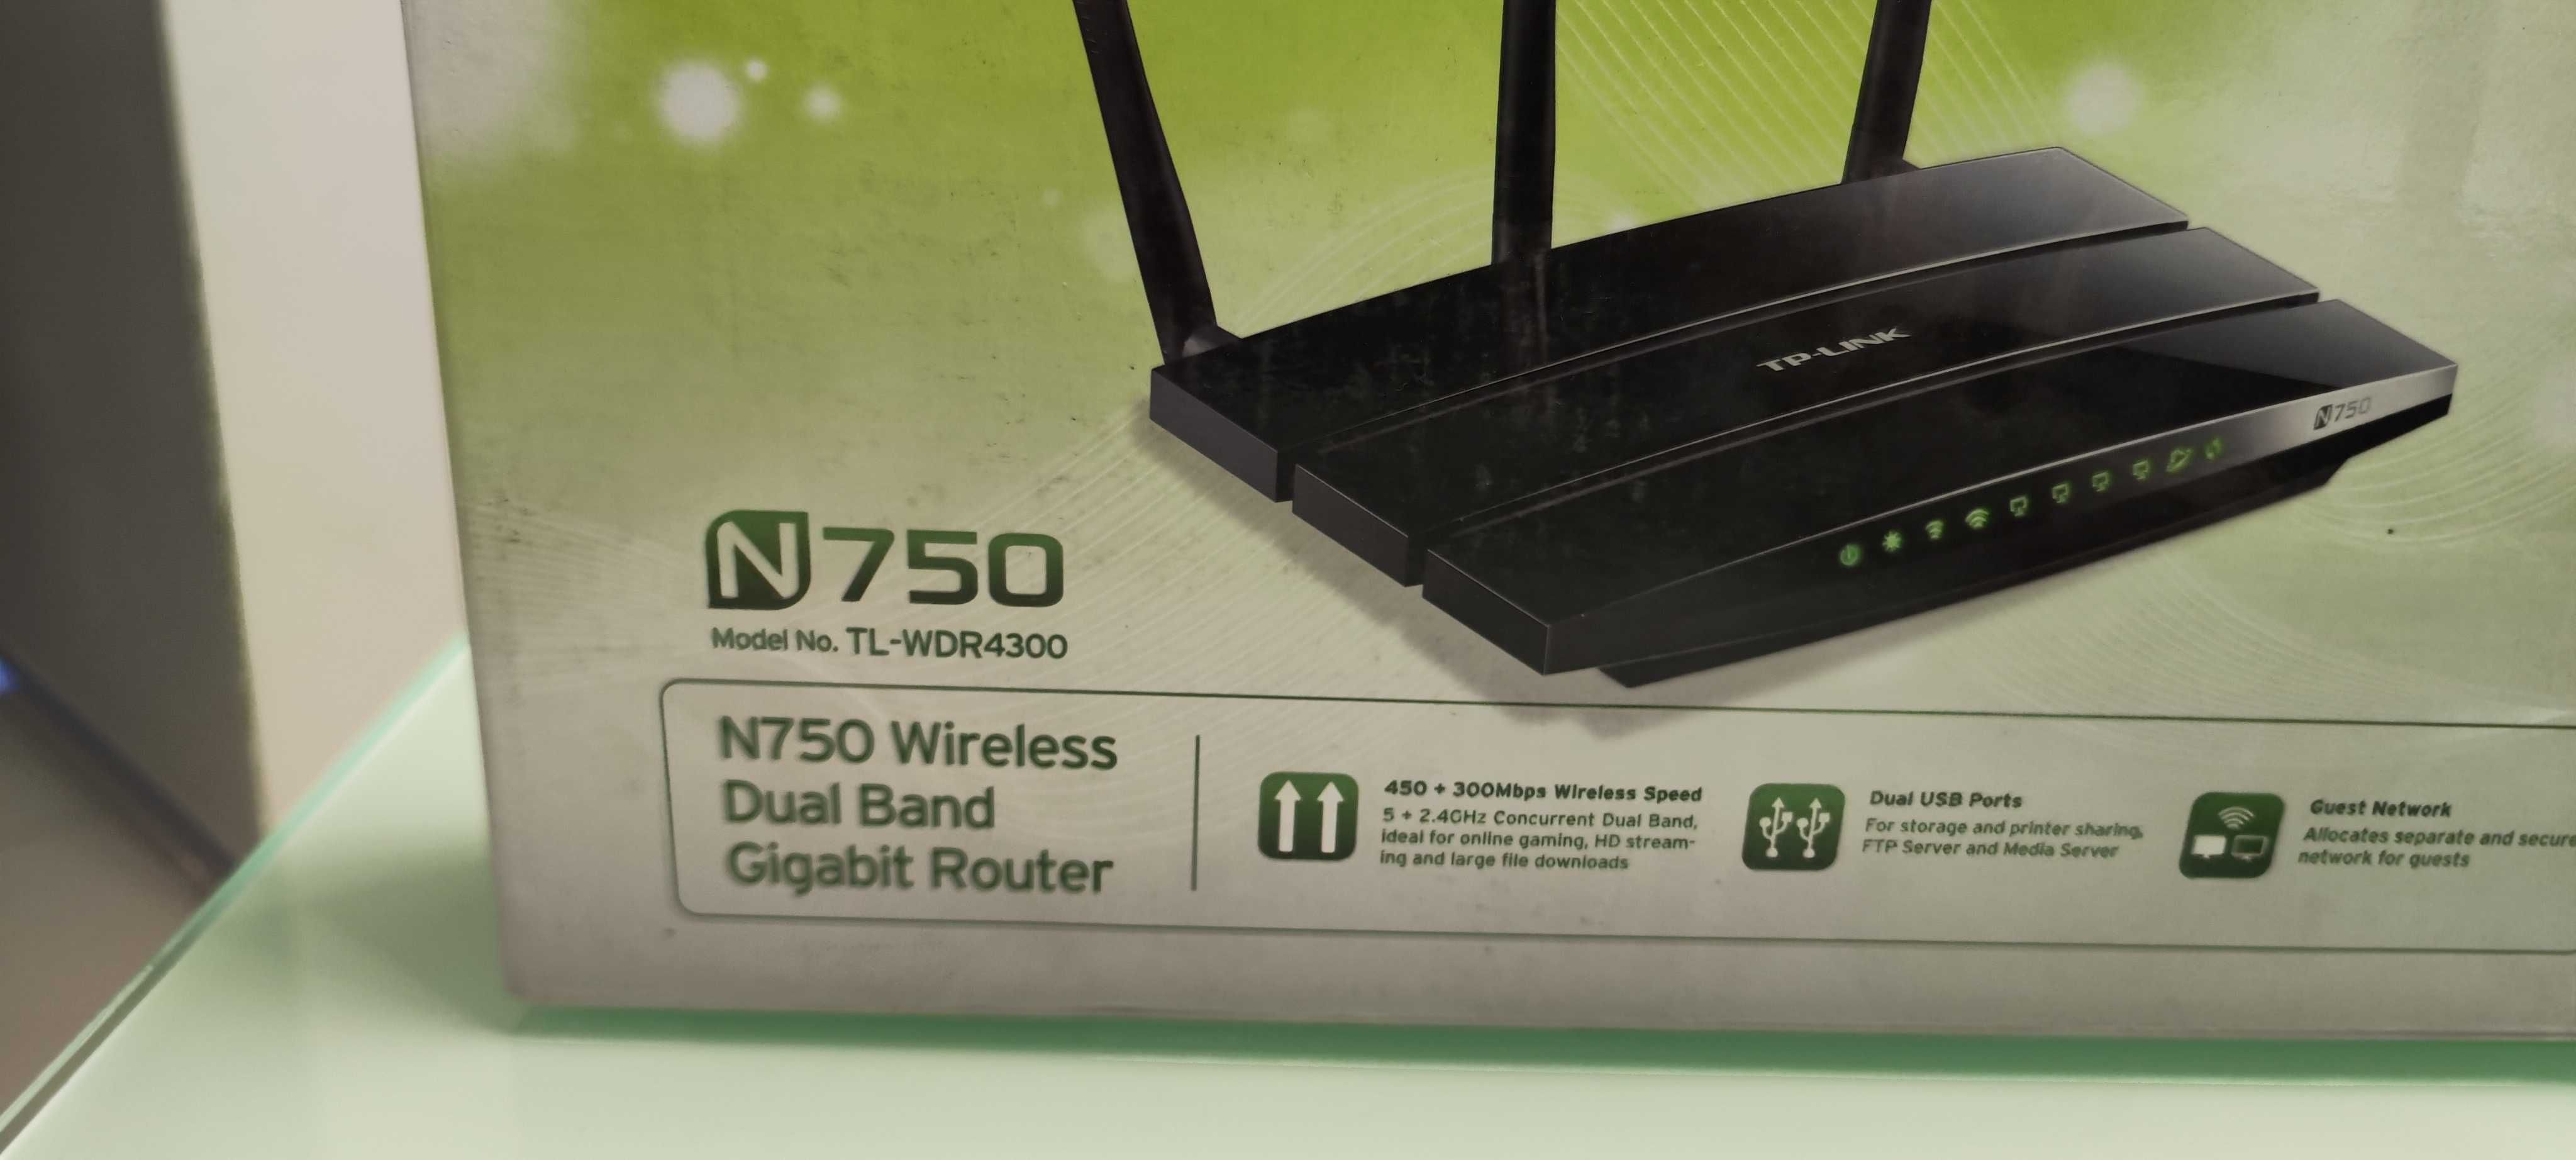 Router TP-LINK N750